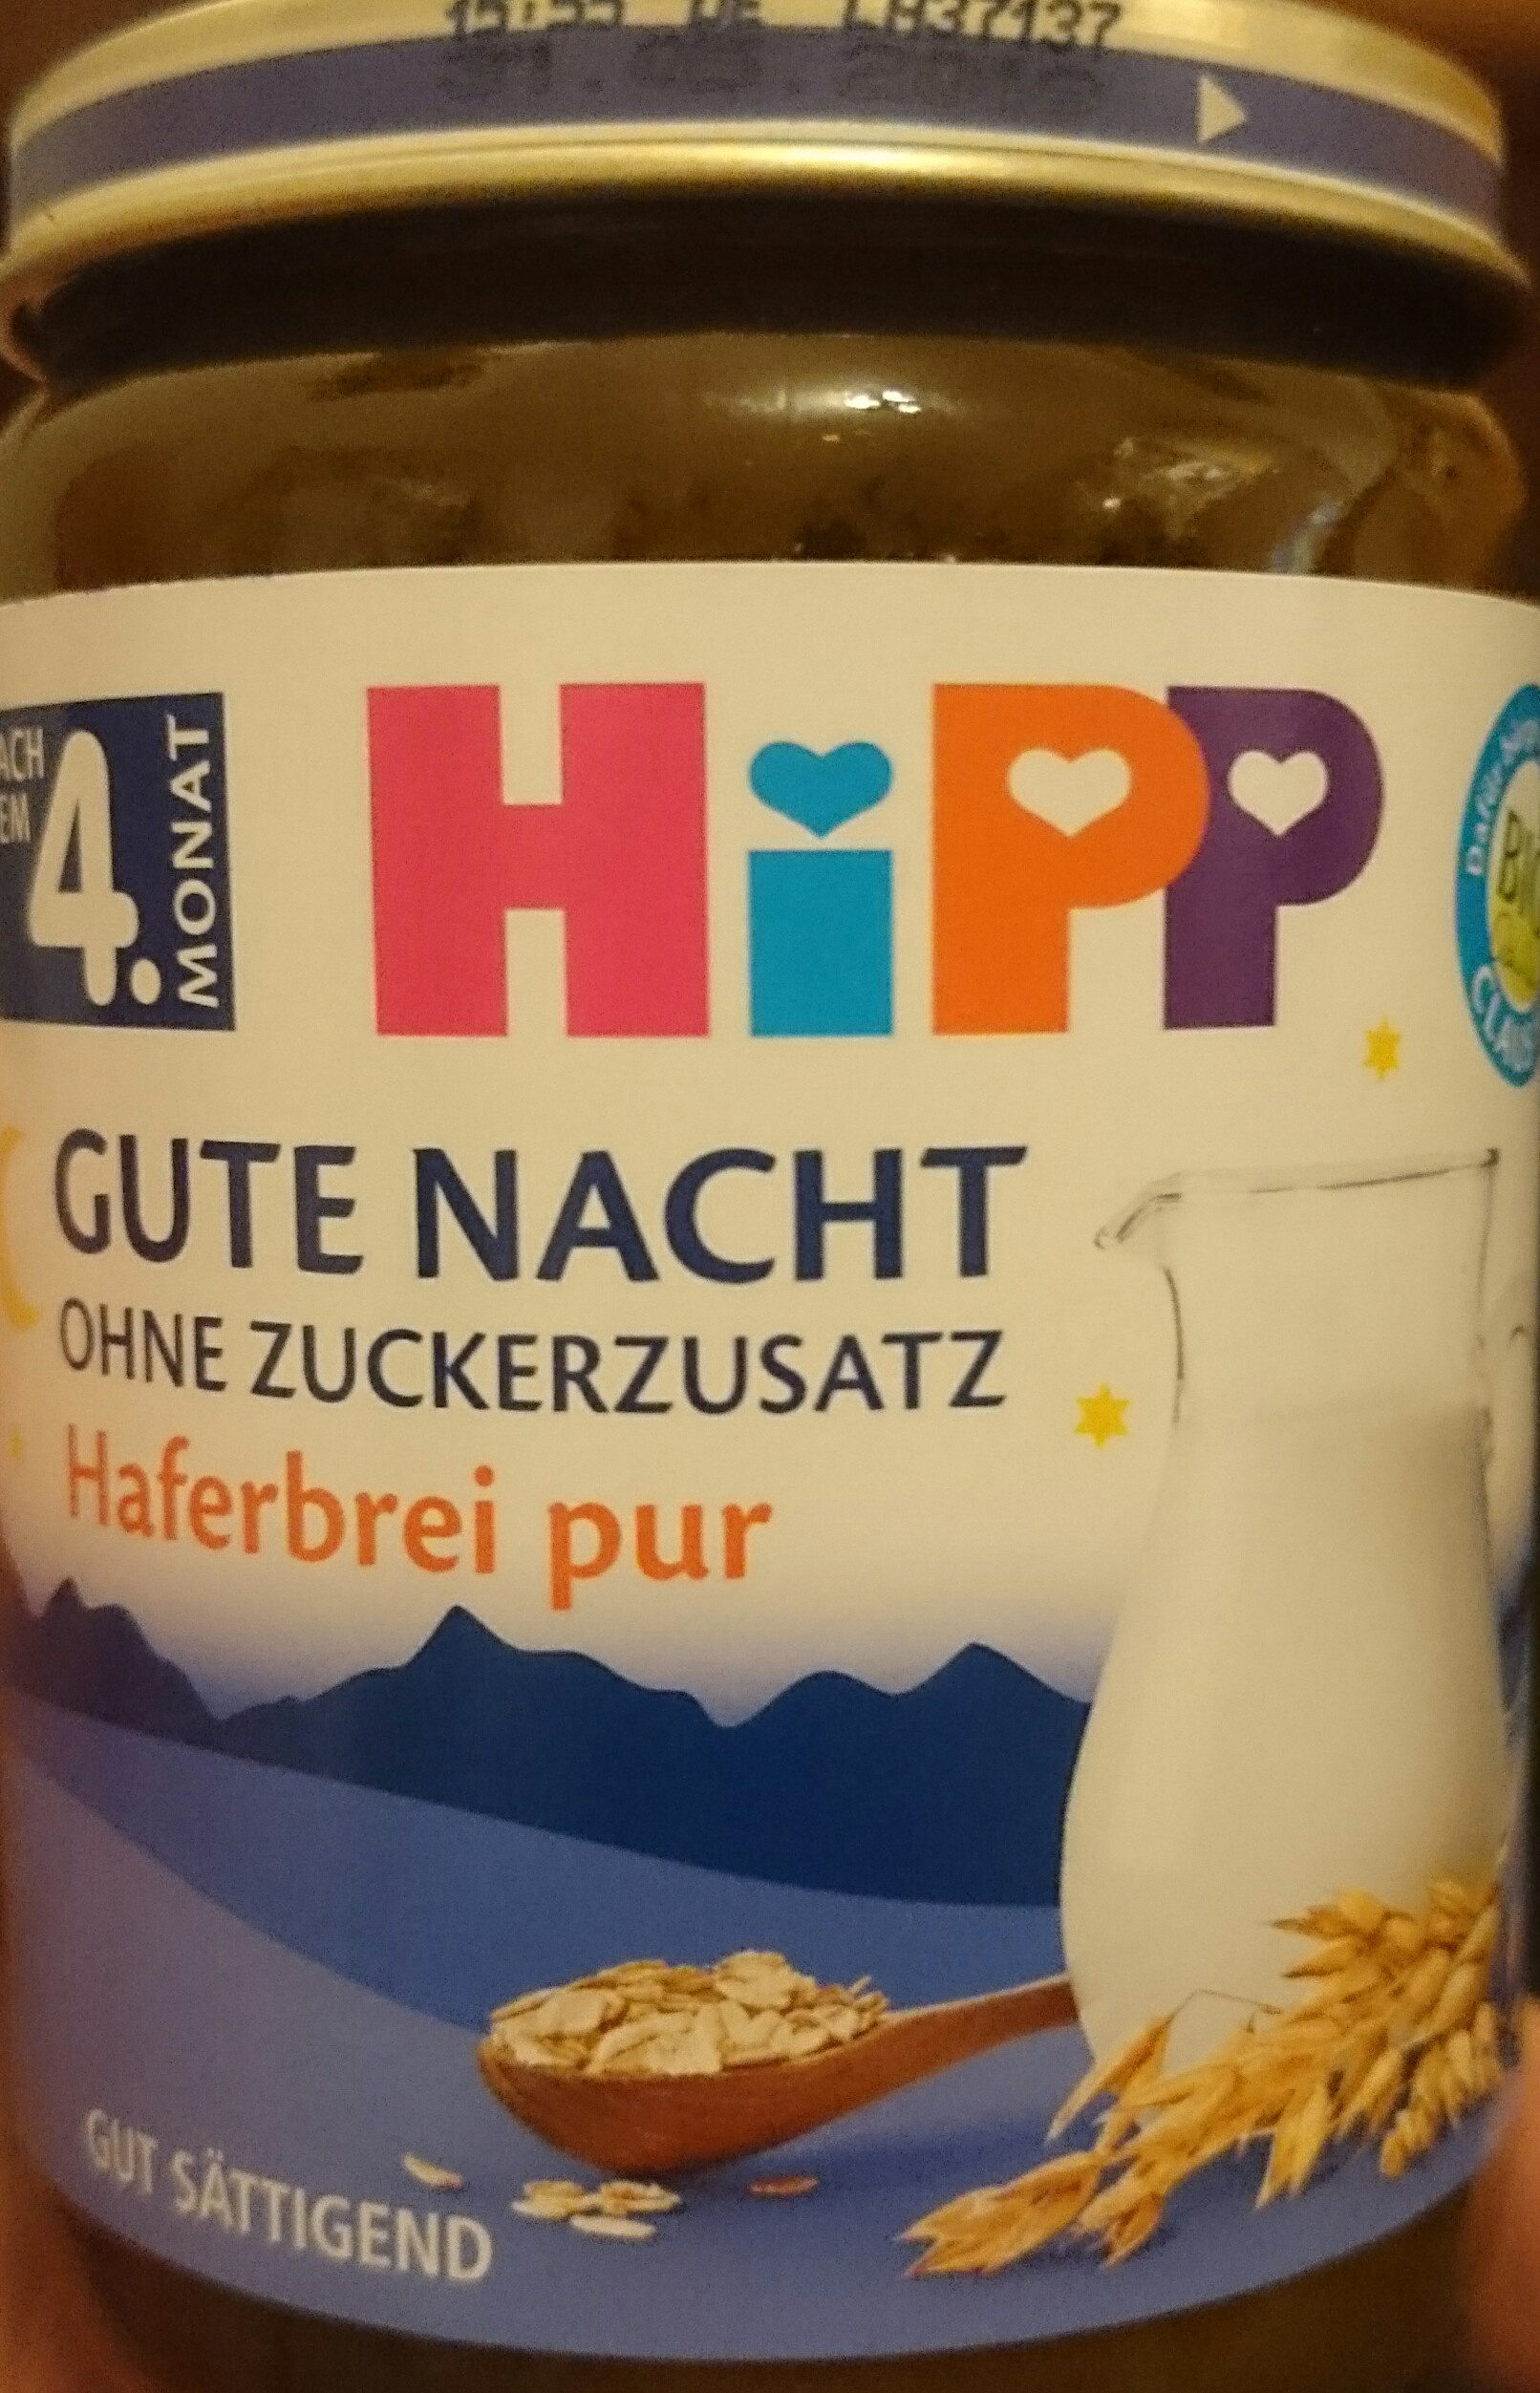 Hipp Gute Nacht, Haferbrei Pur - Produkt